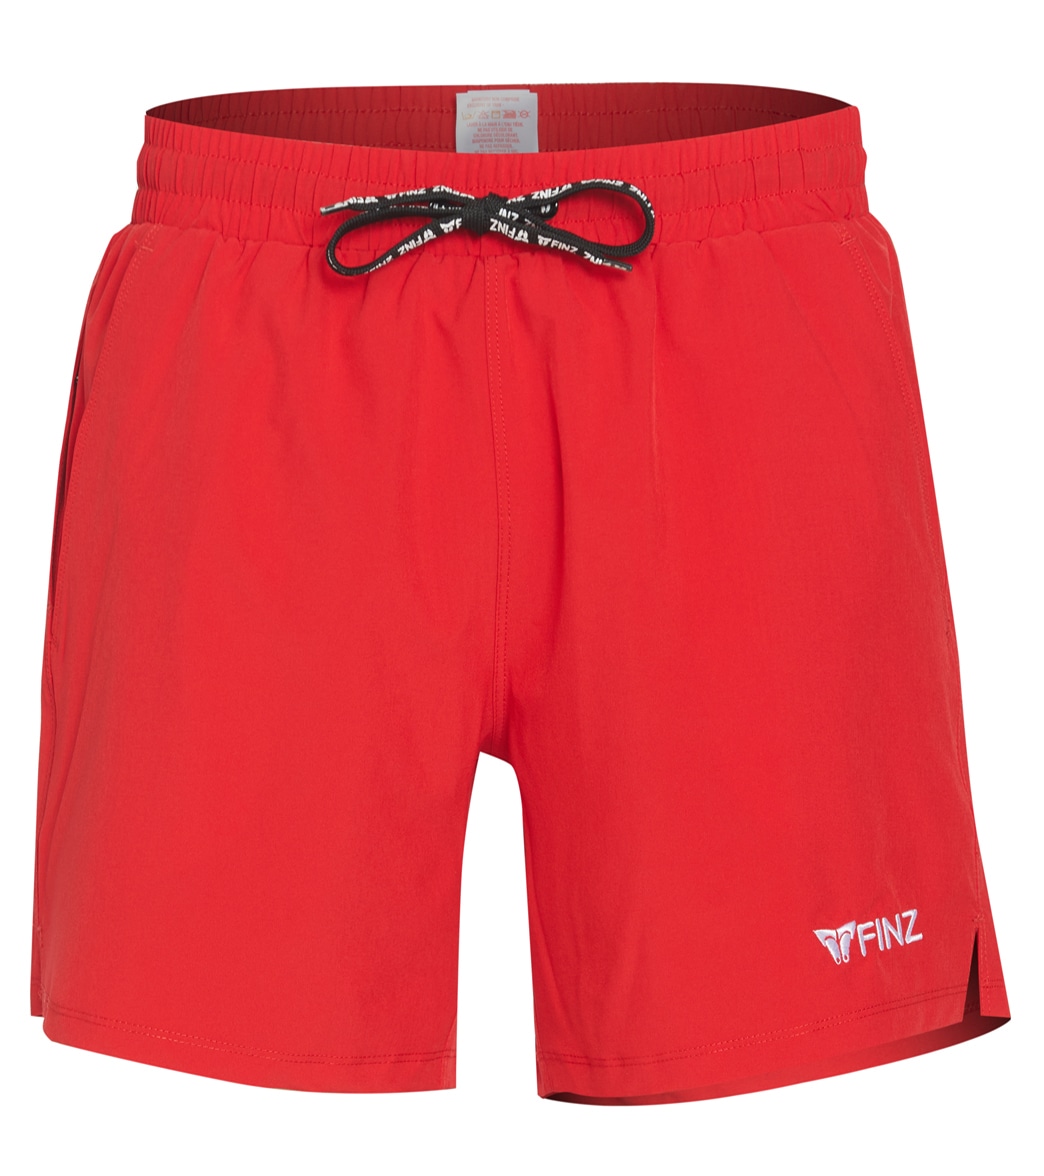 Finz Men's Beach Shorts - Red Large - Swimoutlet.com